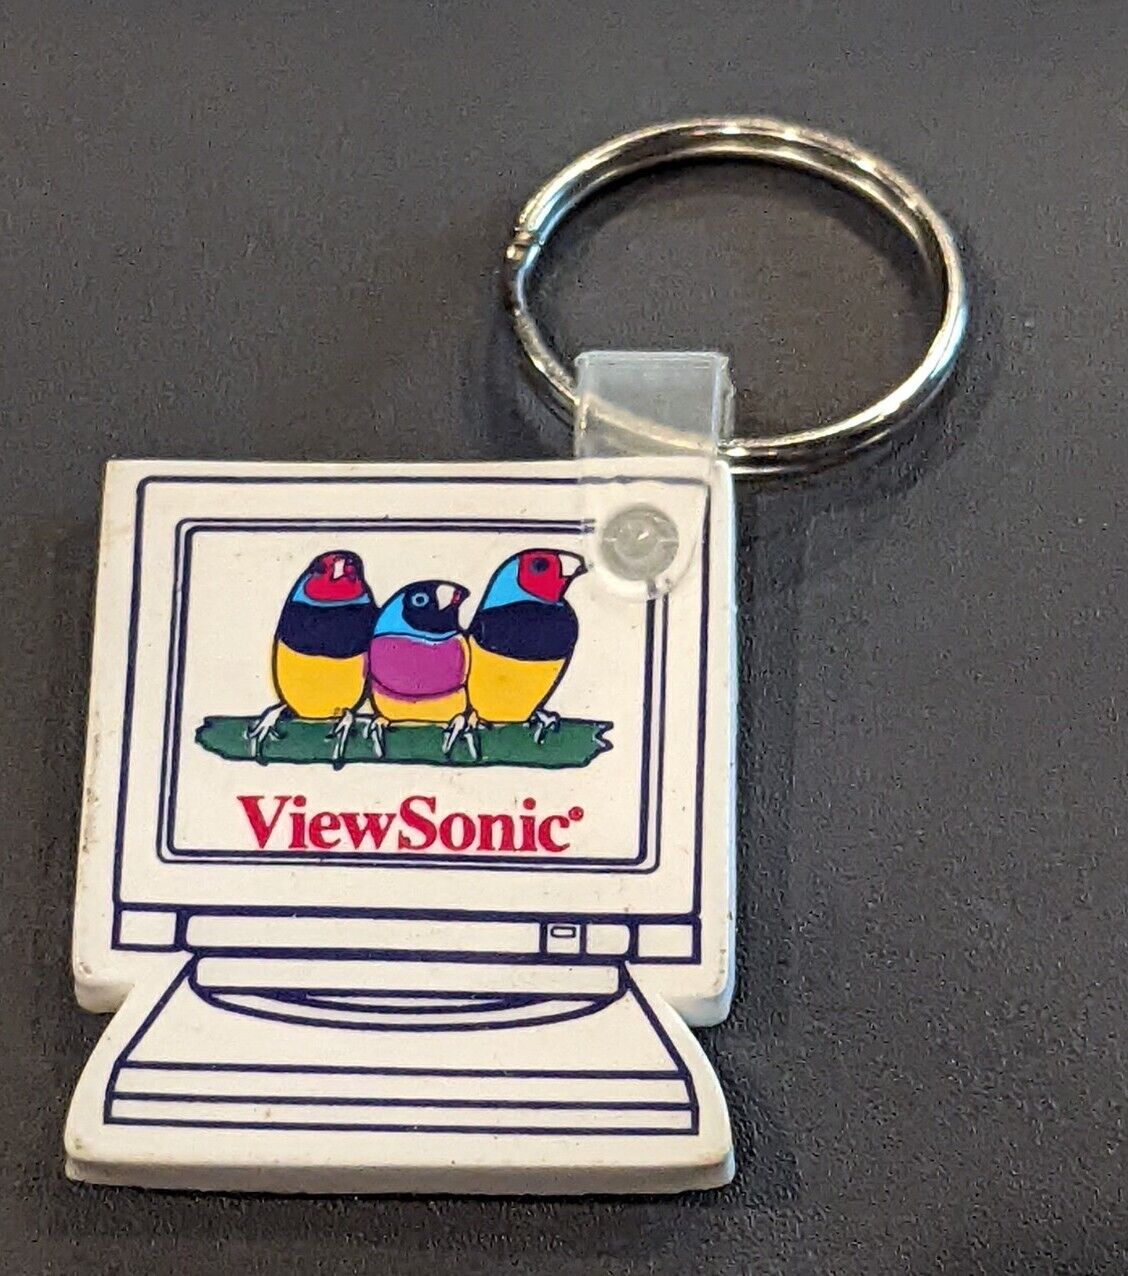 Vintage Viewsonic Computer Advertising Rubber Keychain